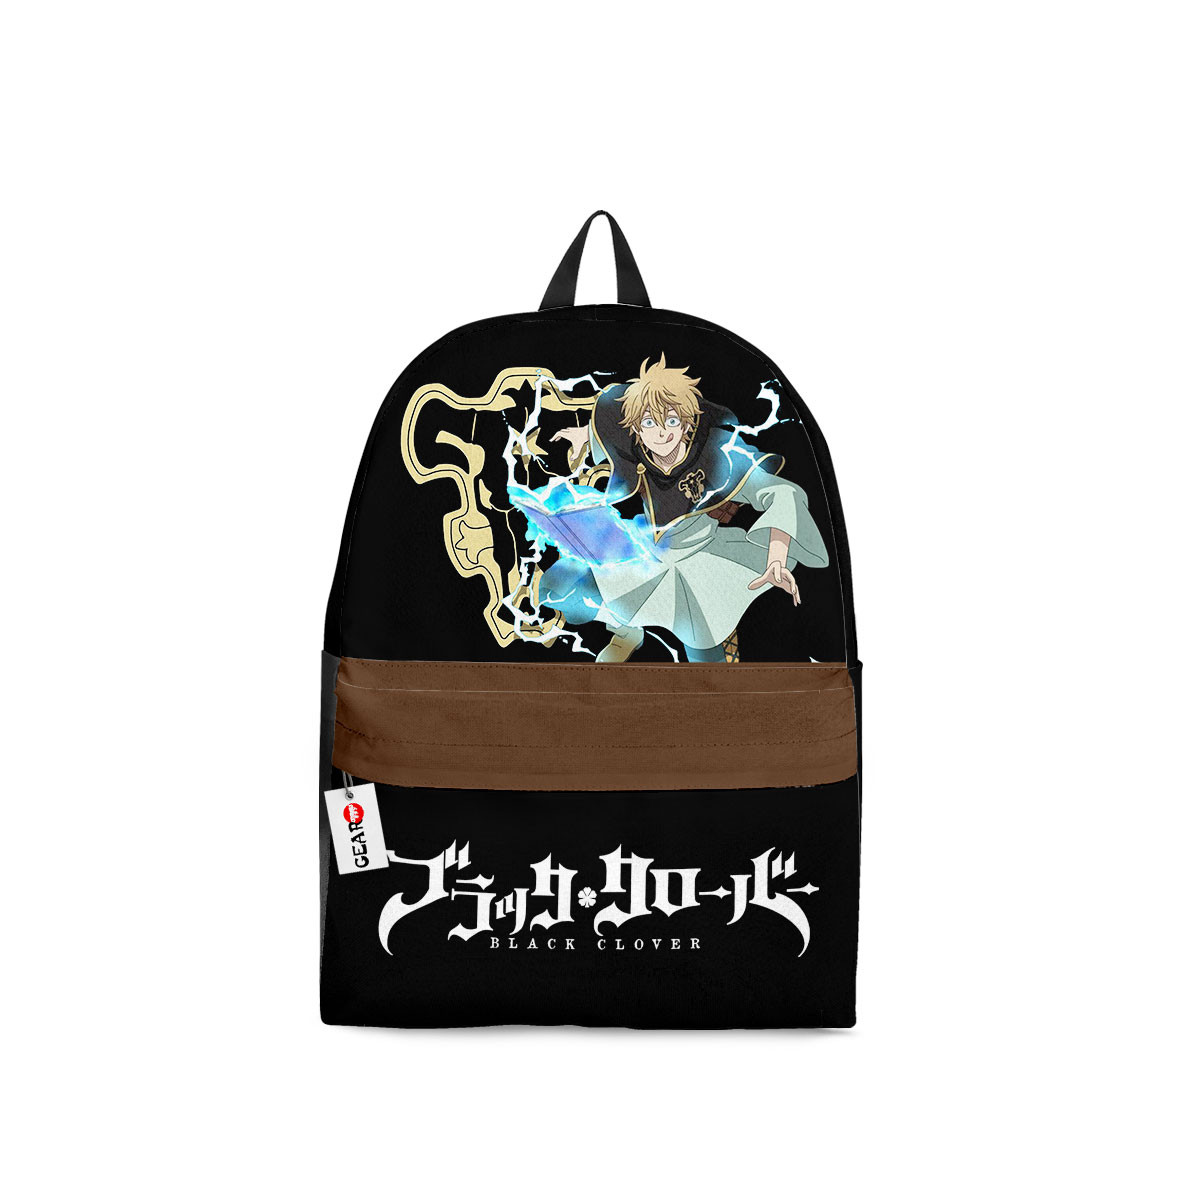 BEST Luck Voltia Black Clover Anime Backpack Bag1